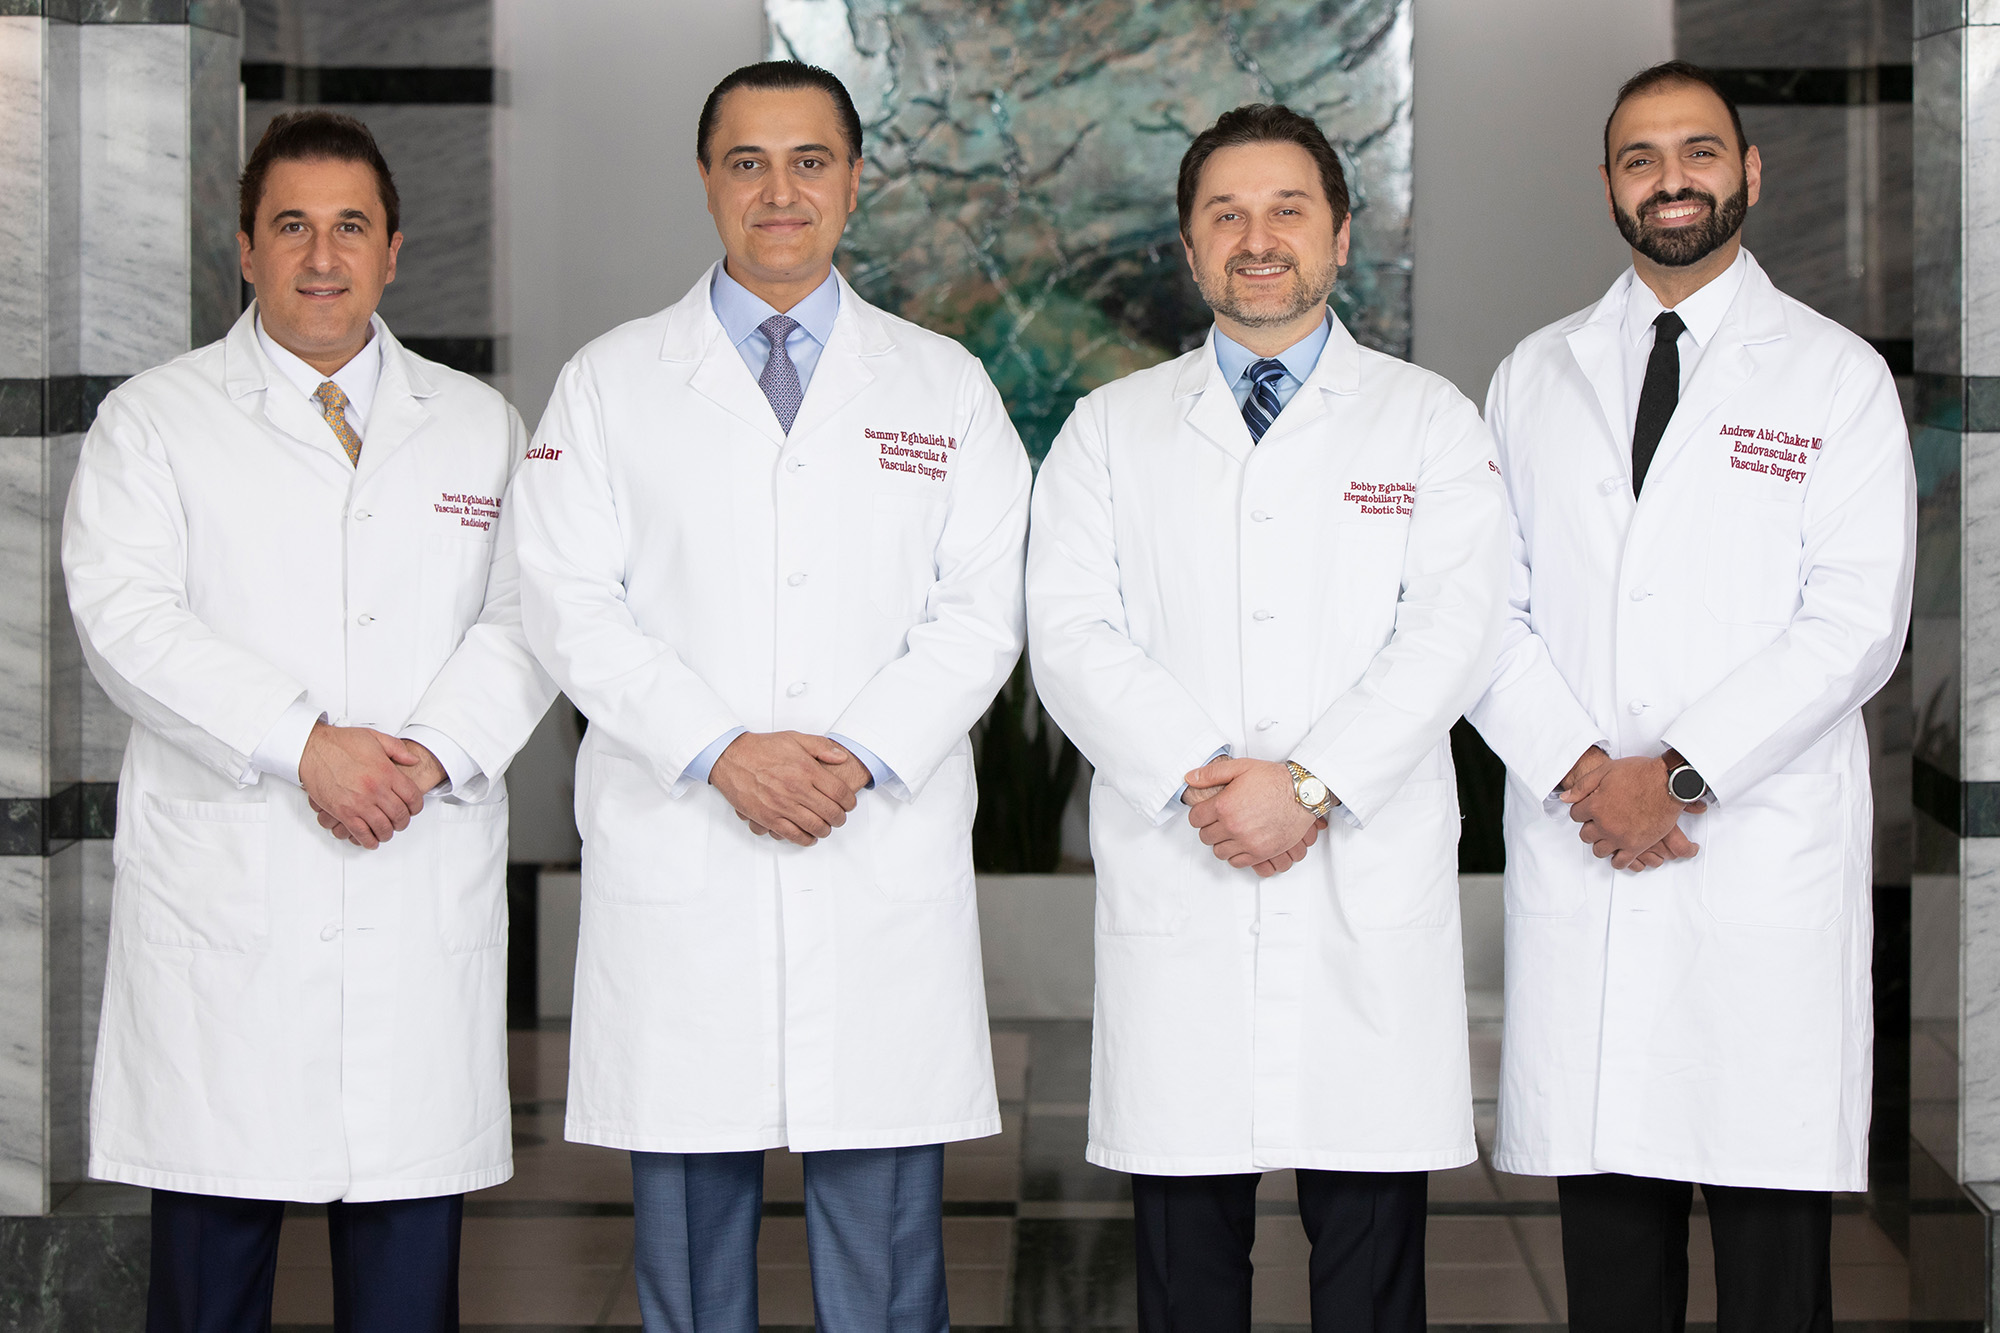 Dr. Navid Eghbalieh, Dr. Sammy Eghbalieh, Dr. Babak Eghbalieh and Dr. Andrew Abi-Chaker of SCMSC